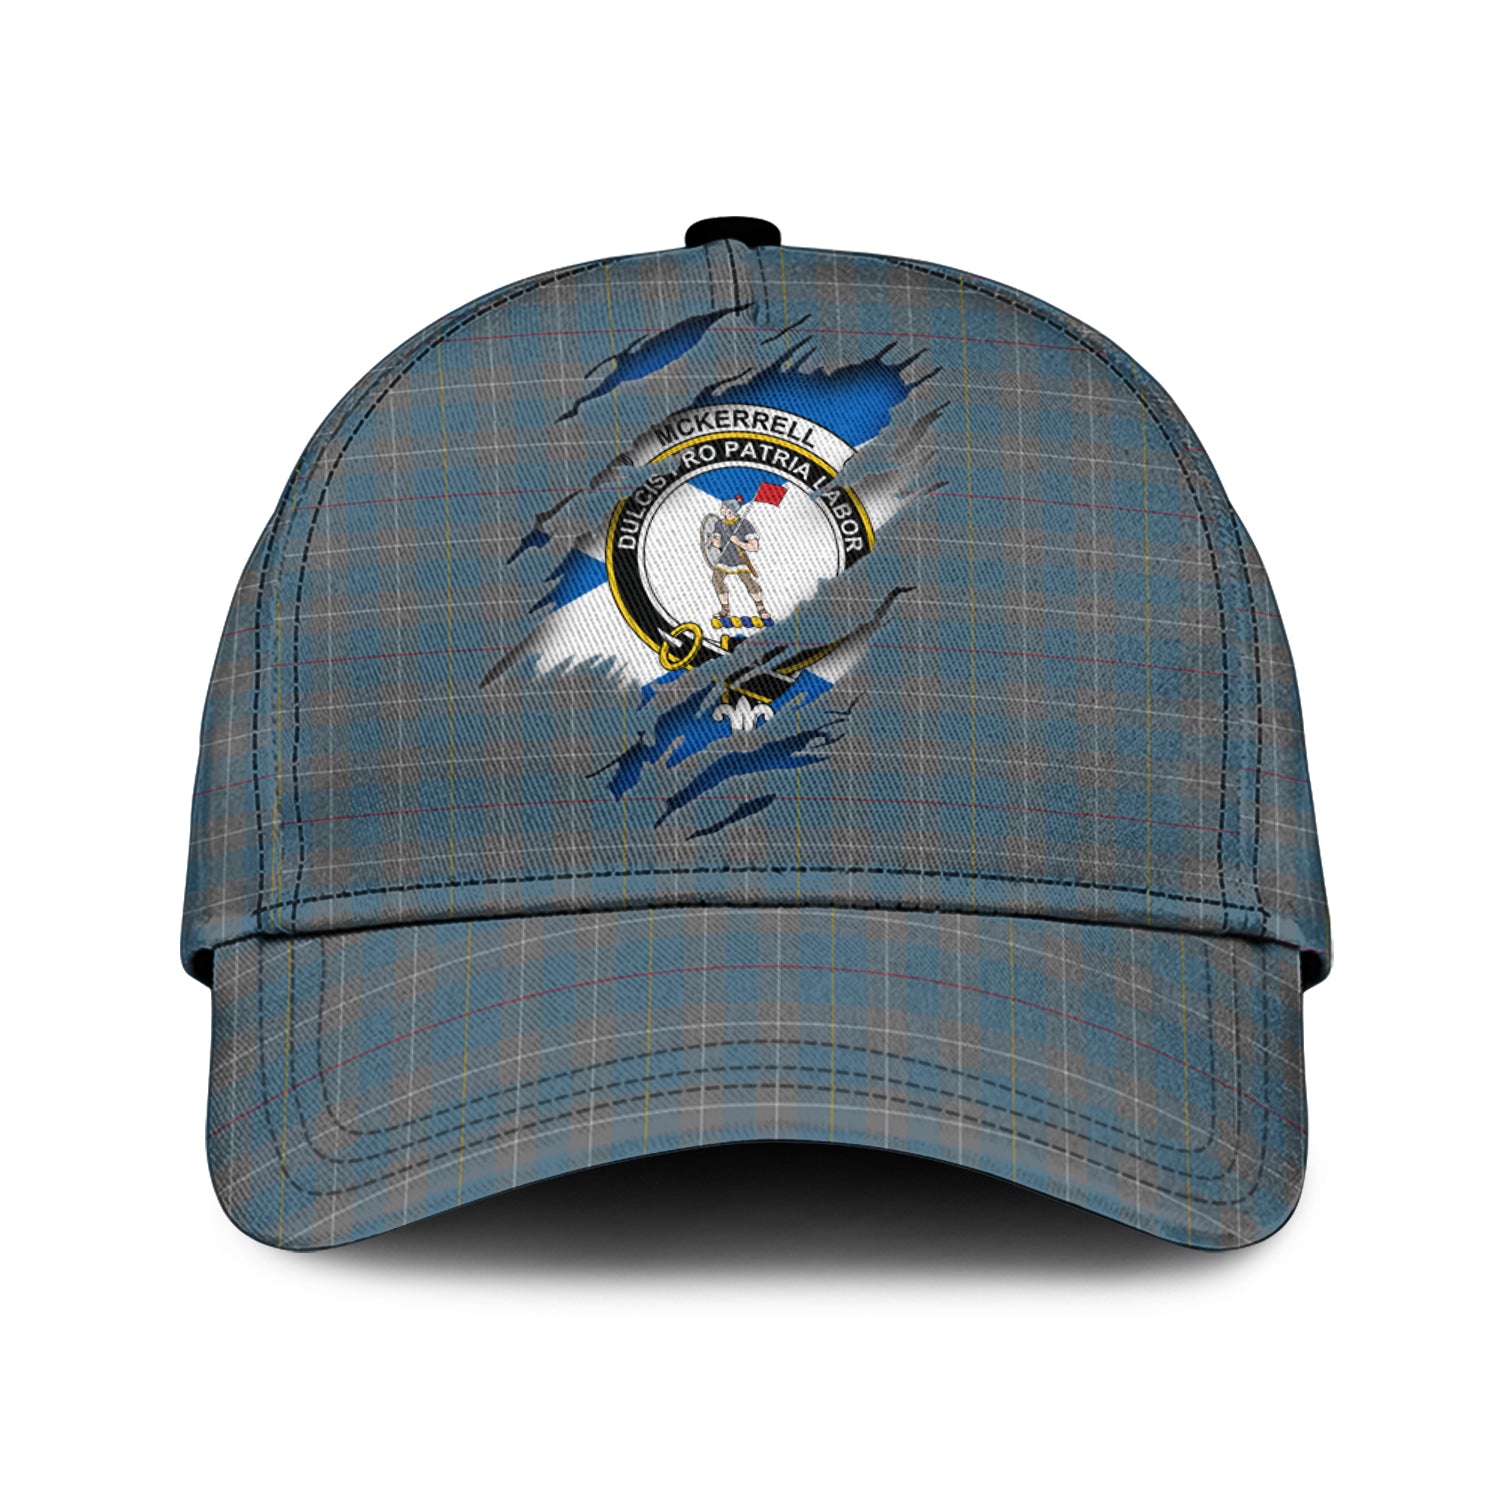 mckerrell-of-hillhouse-dress-tartan-plaid-cap-family-crest-in-me-style-tartan-baseball-cap